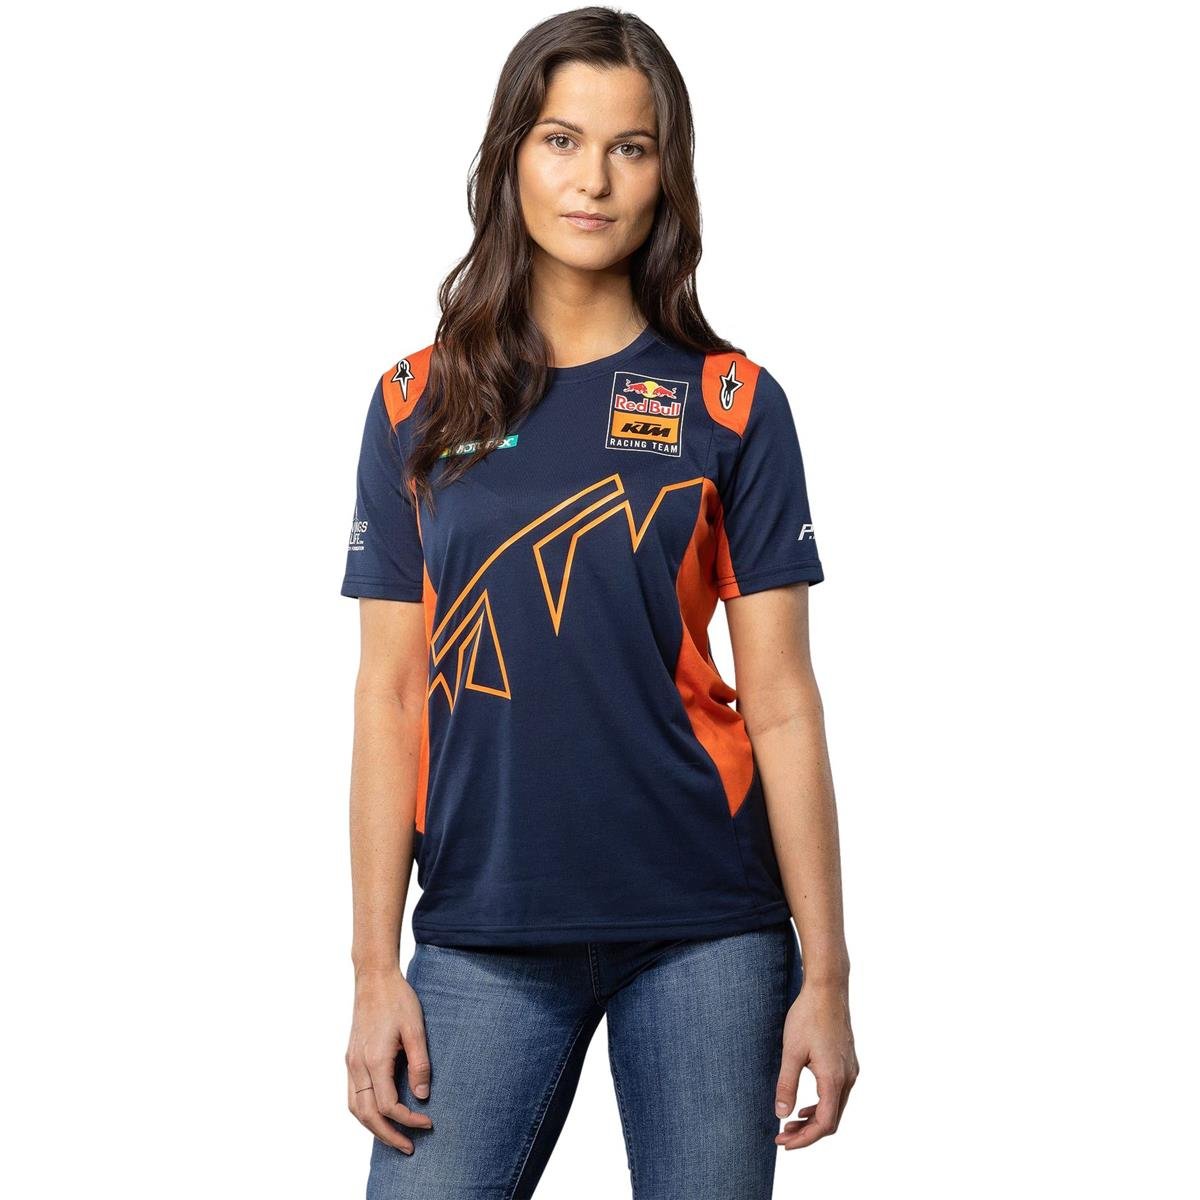 Red Bull Donna T-Shirt KTM Official Teamline Navy/Arancione